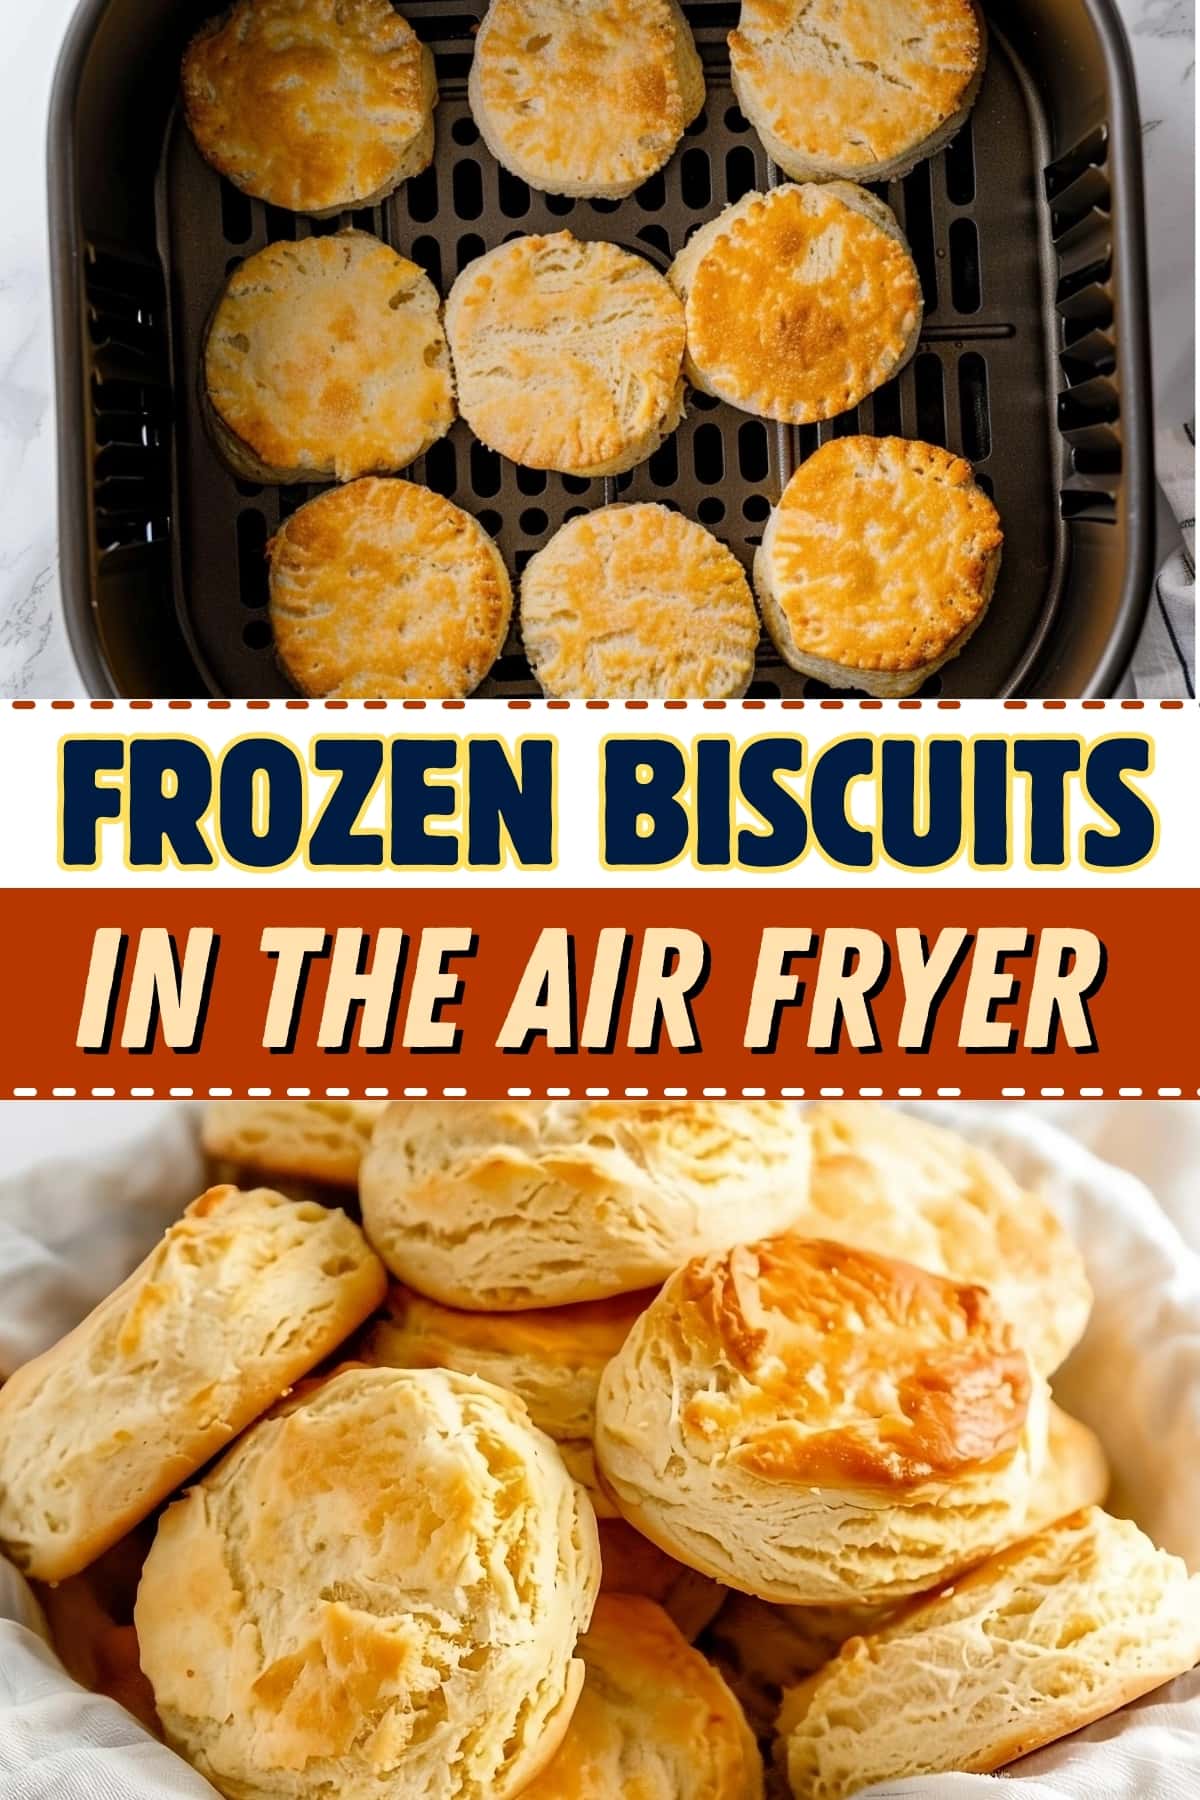 Frozen biscuits in the air fryer.